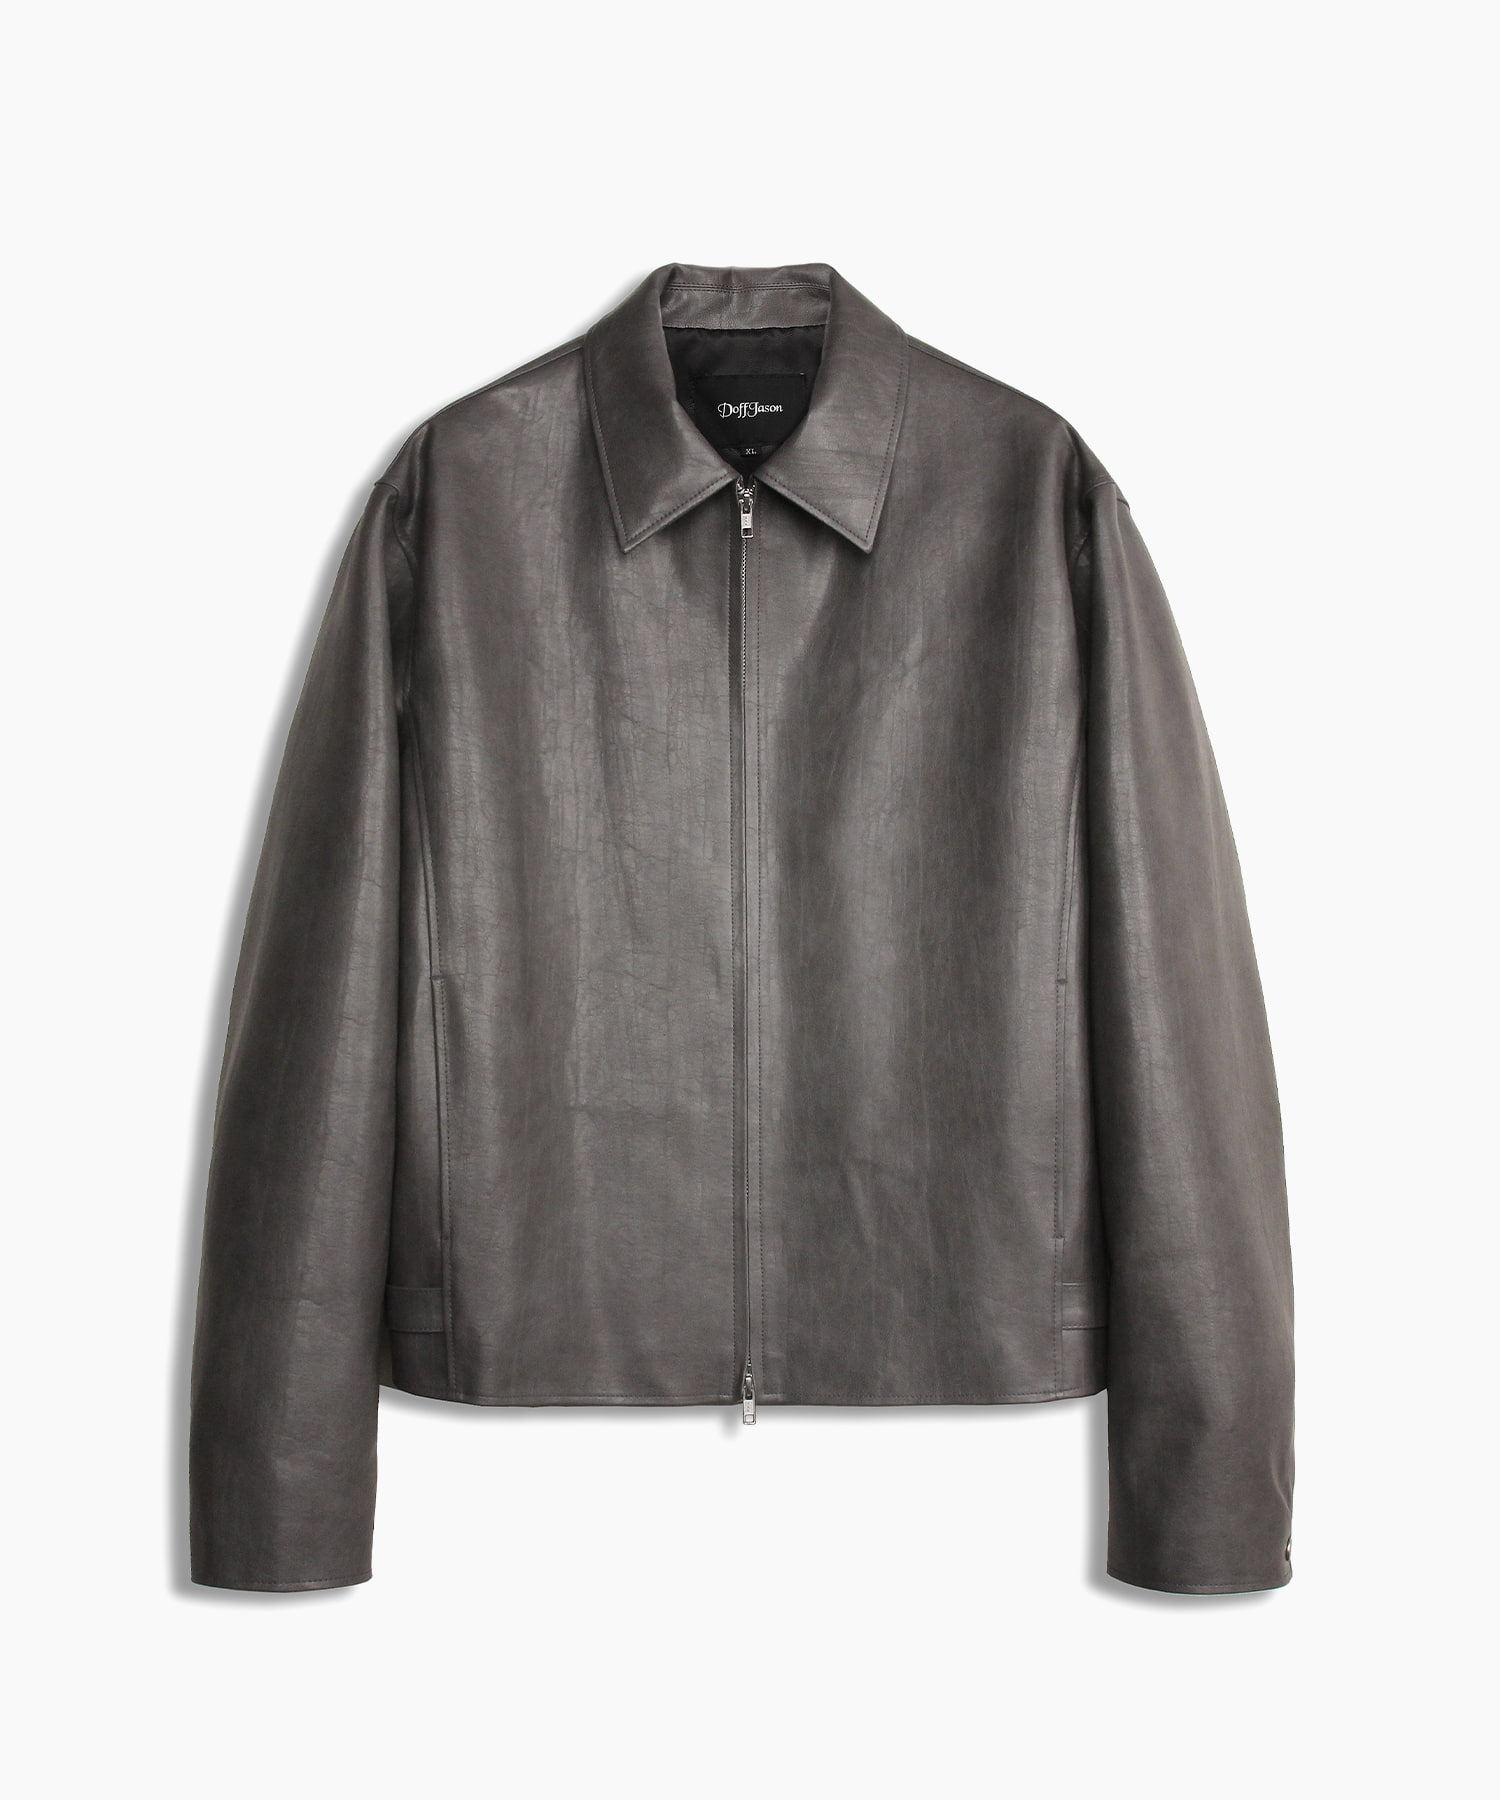 Overfit vegan leather crop single jacket GREY